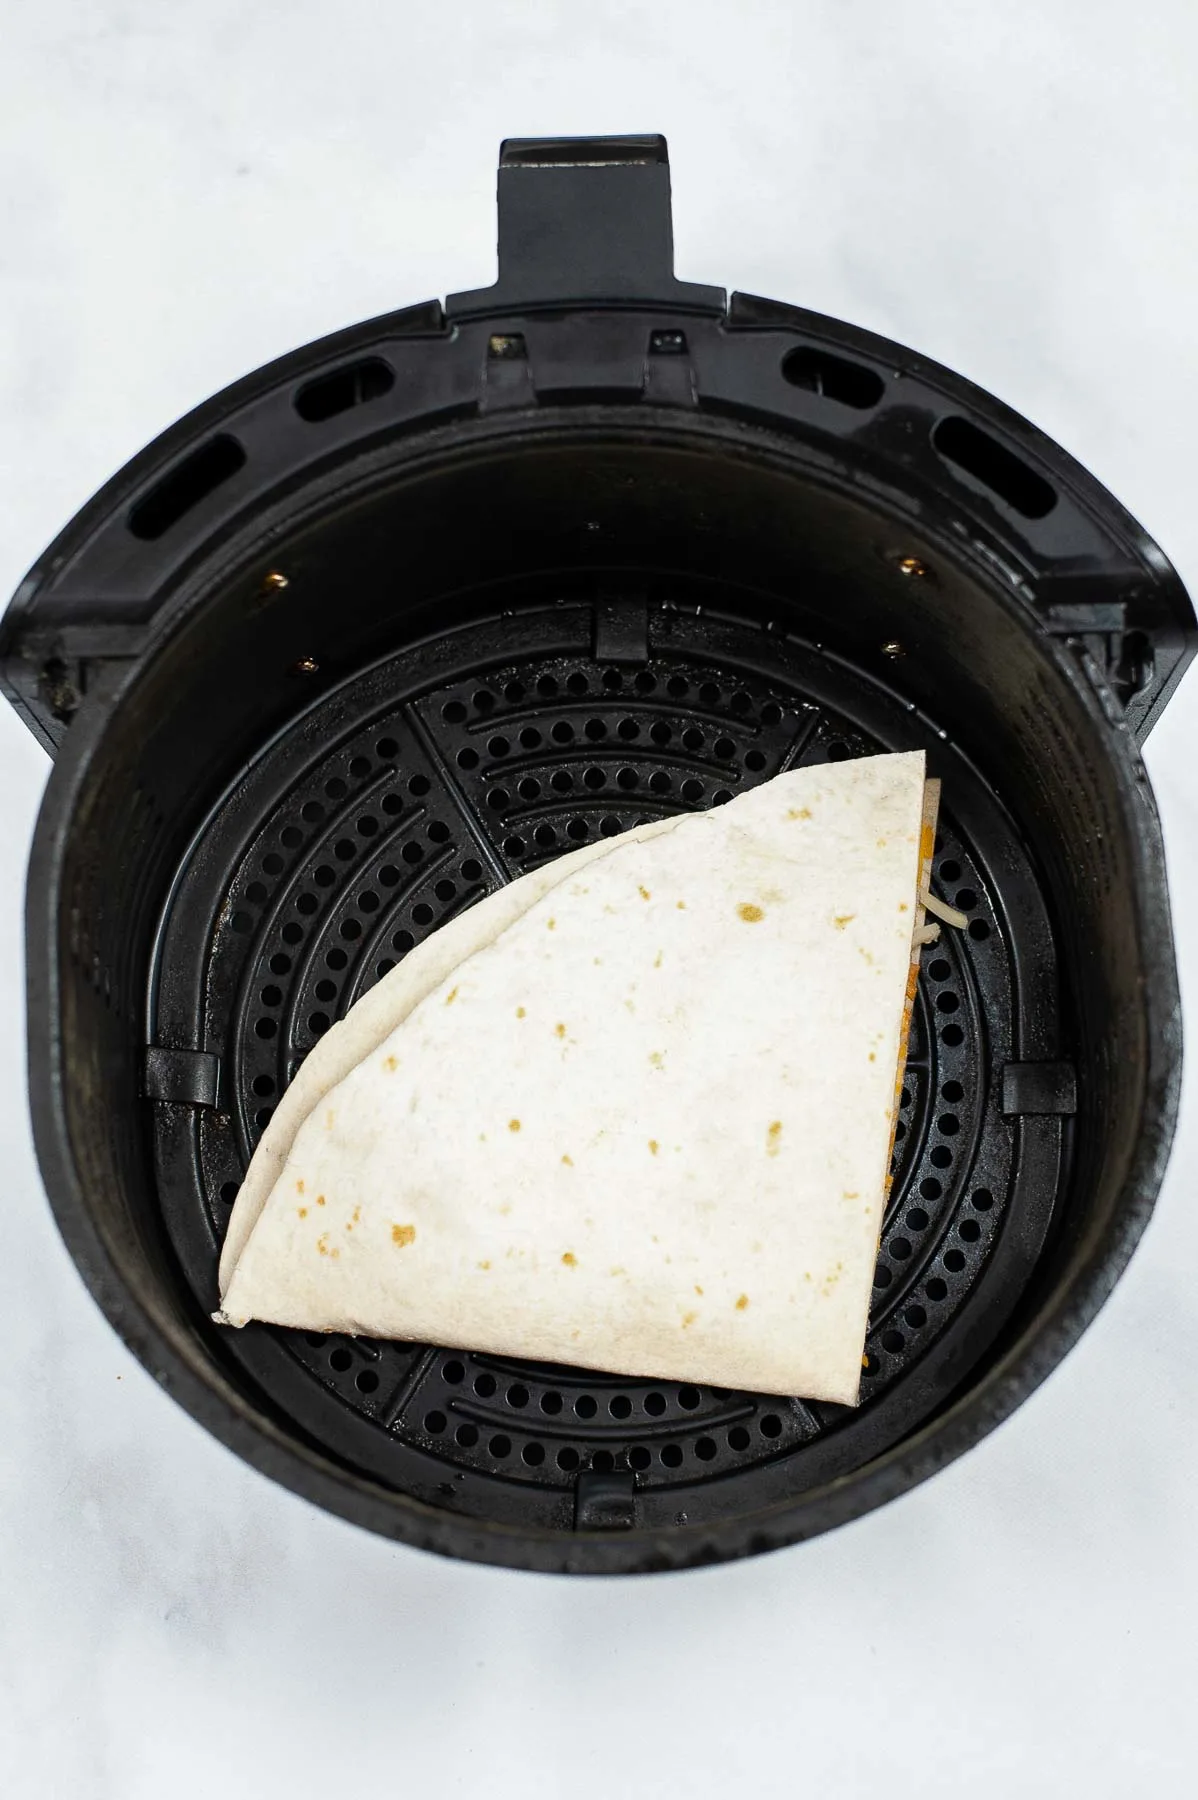 Making a quesadilla in an air fryer.